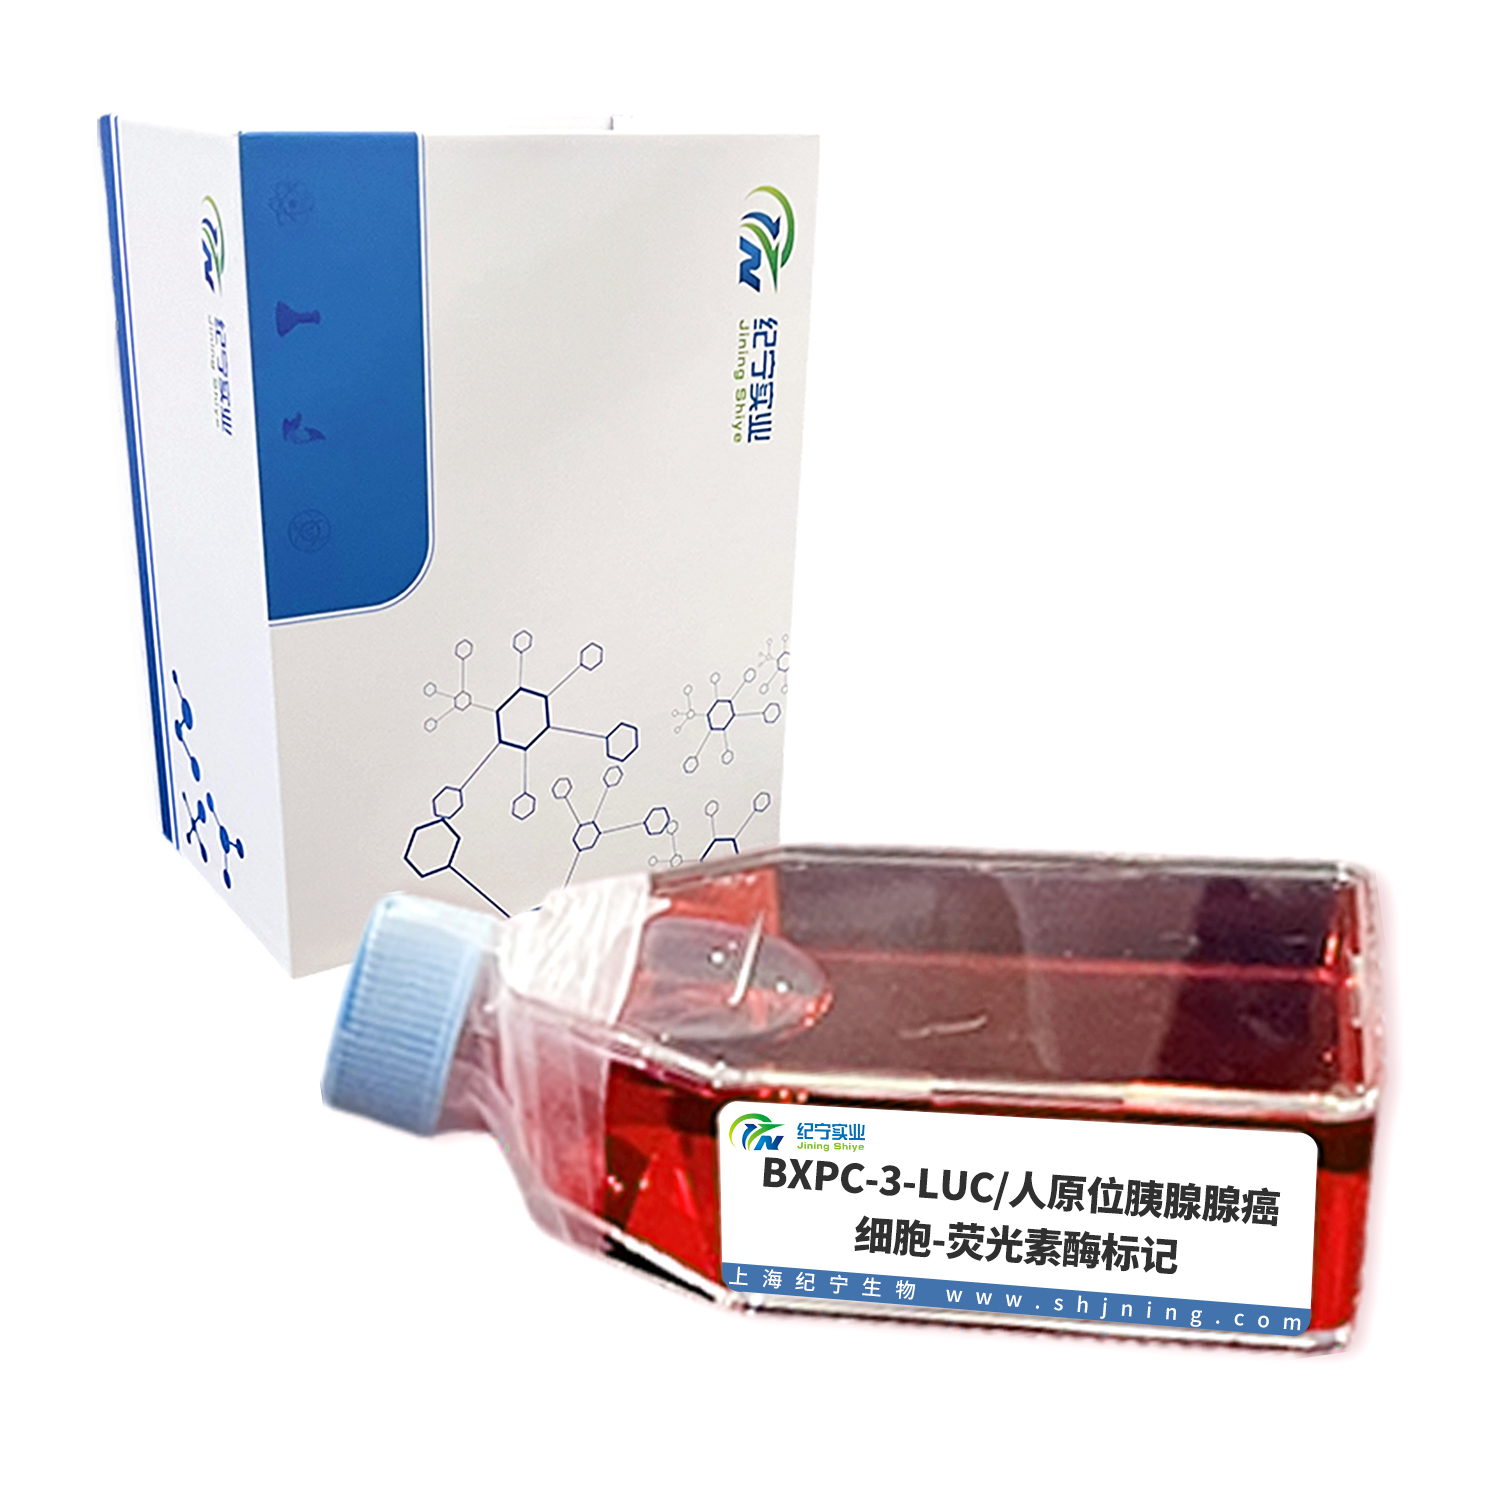 BXPC-3-LUC/人原位胰腺腺癌细胞-荧光素酶标记